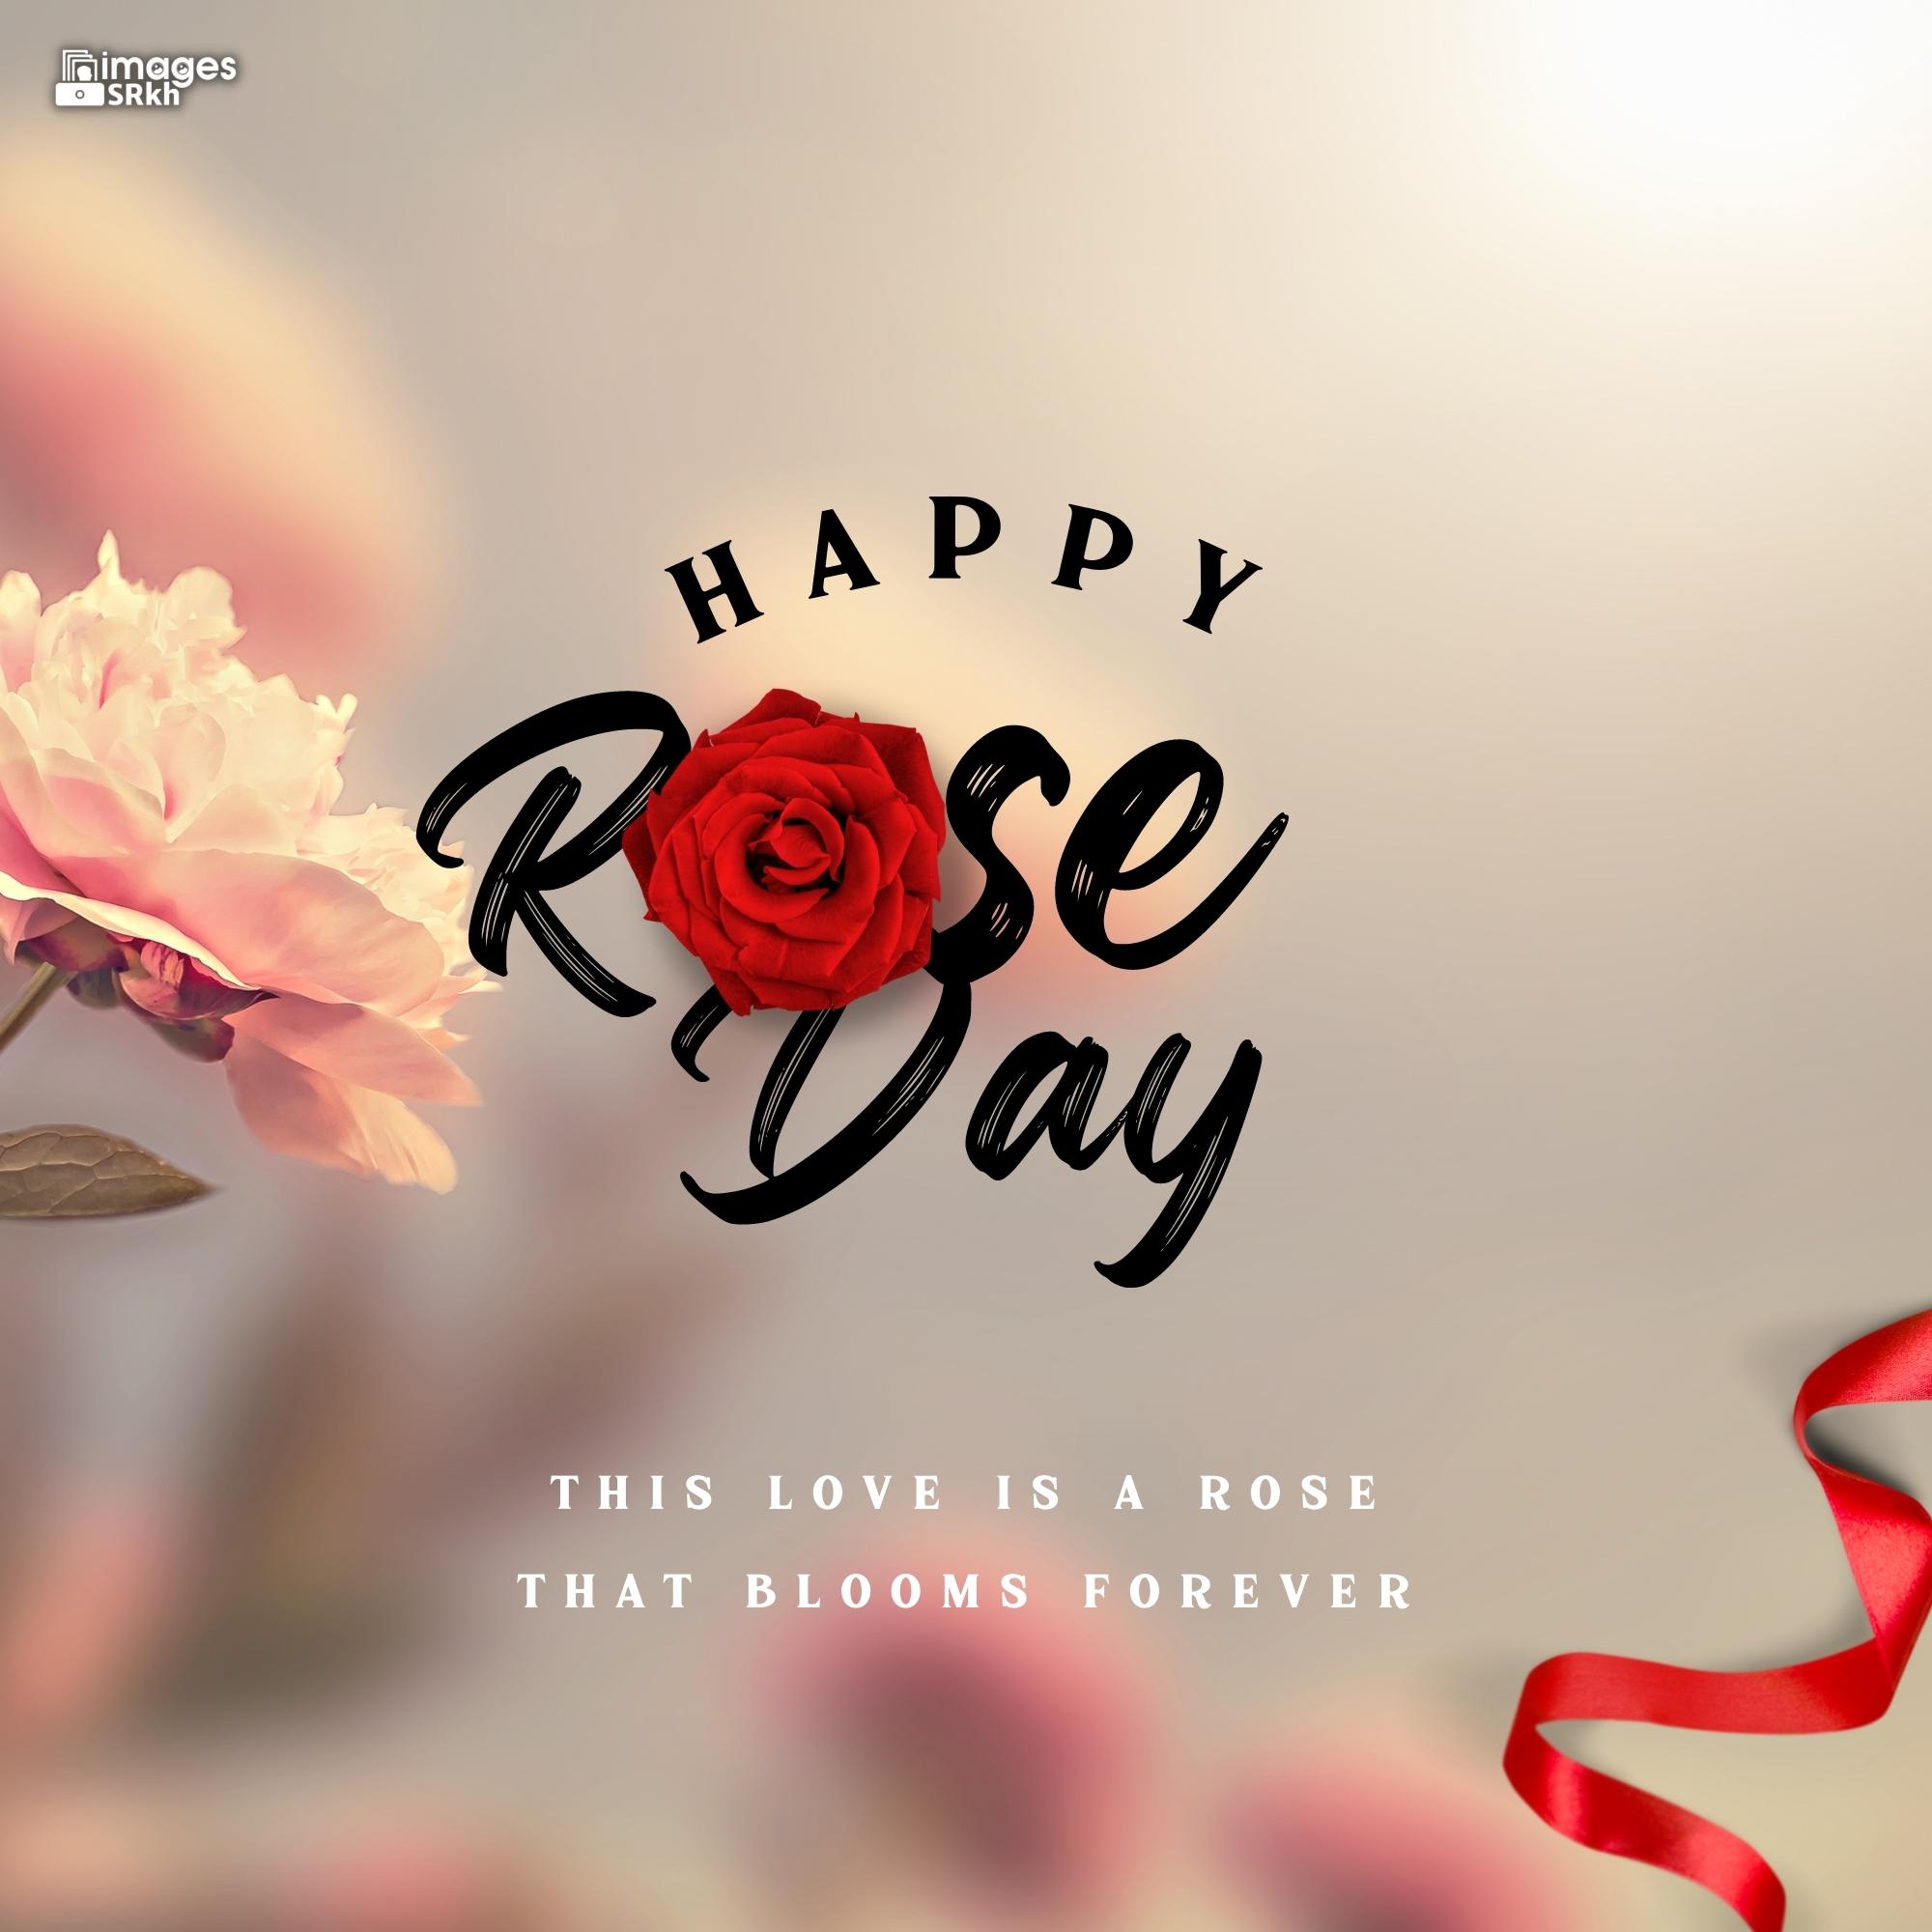 🔥 Happy Rose Day Image Hd Download (49) Download free - Images SRkh